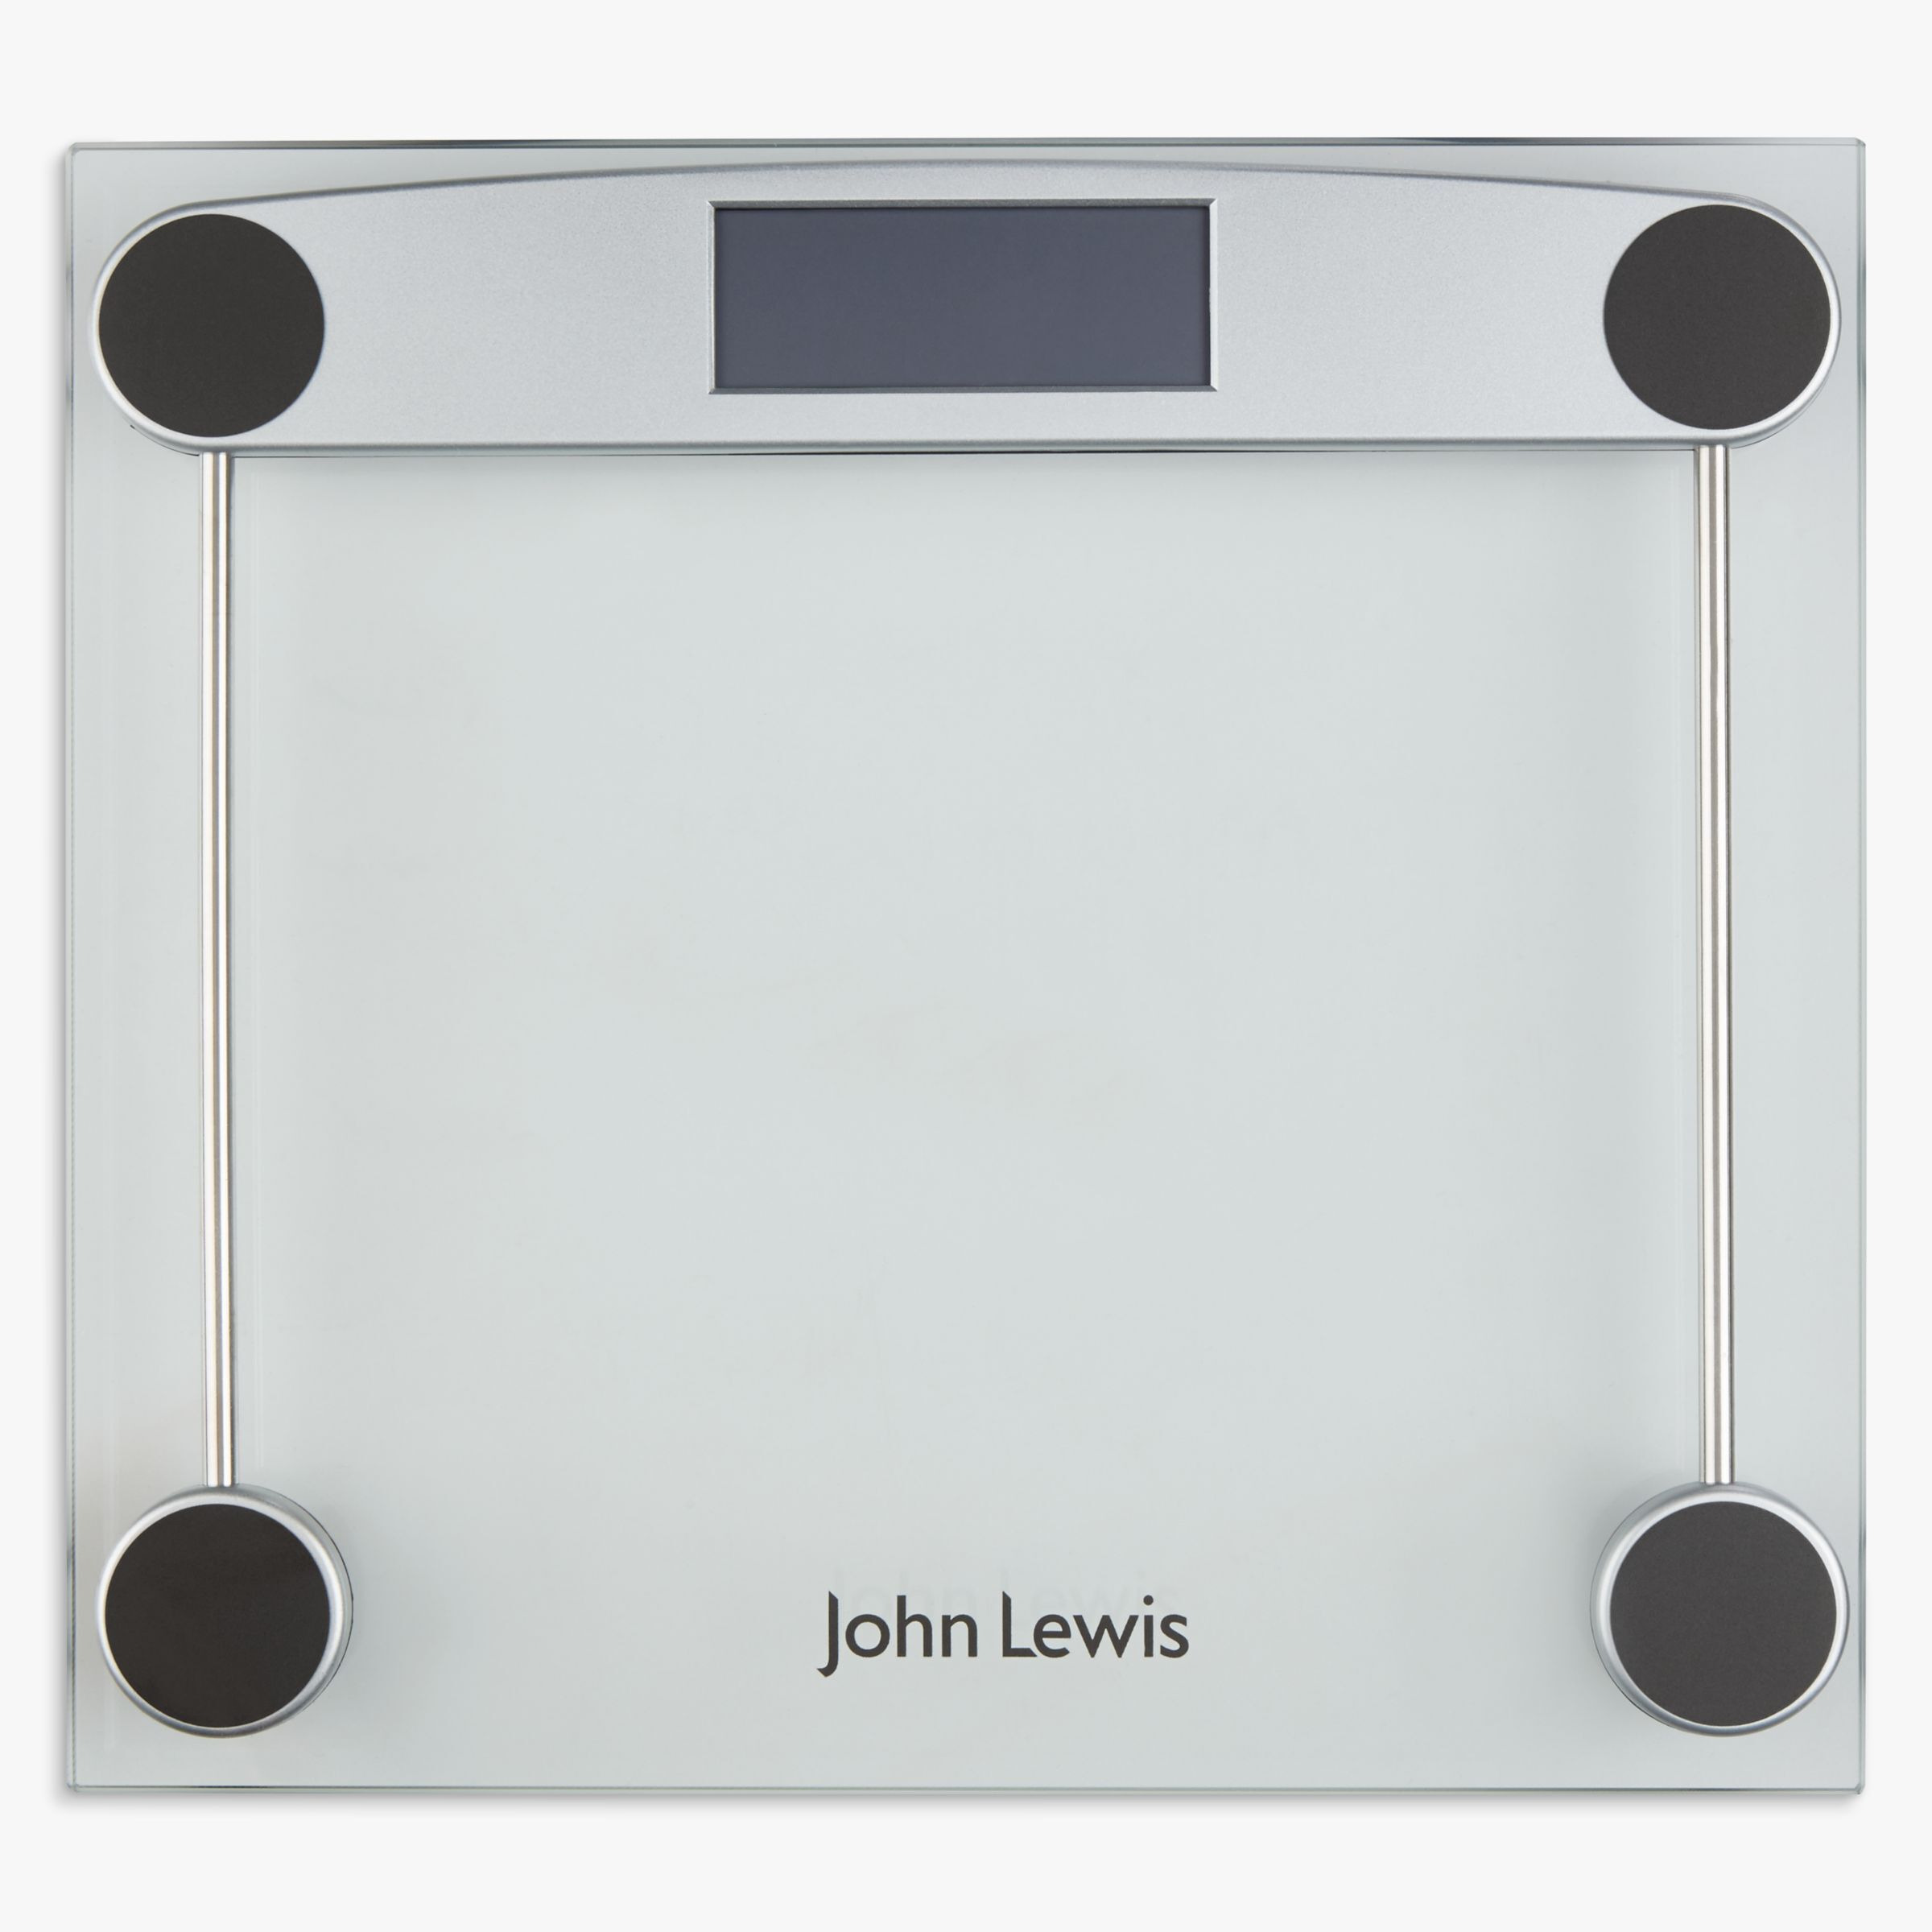 John Lewis Digital Glass Bathroom Scale - image 1